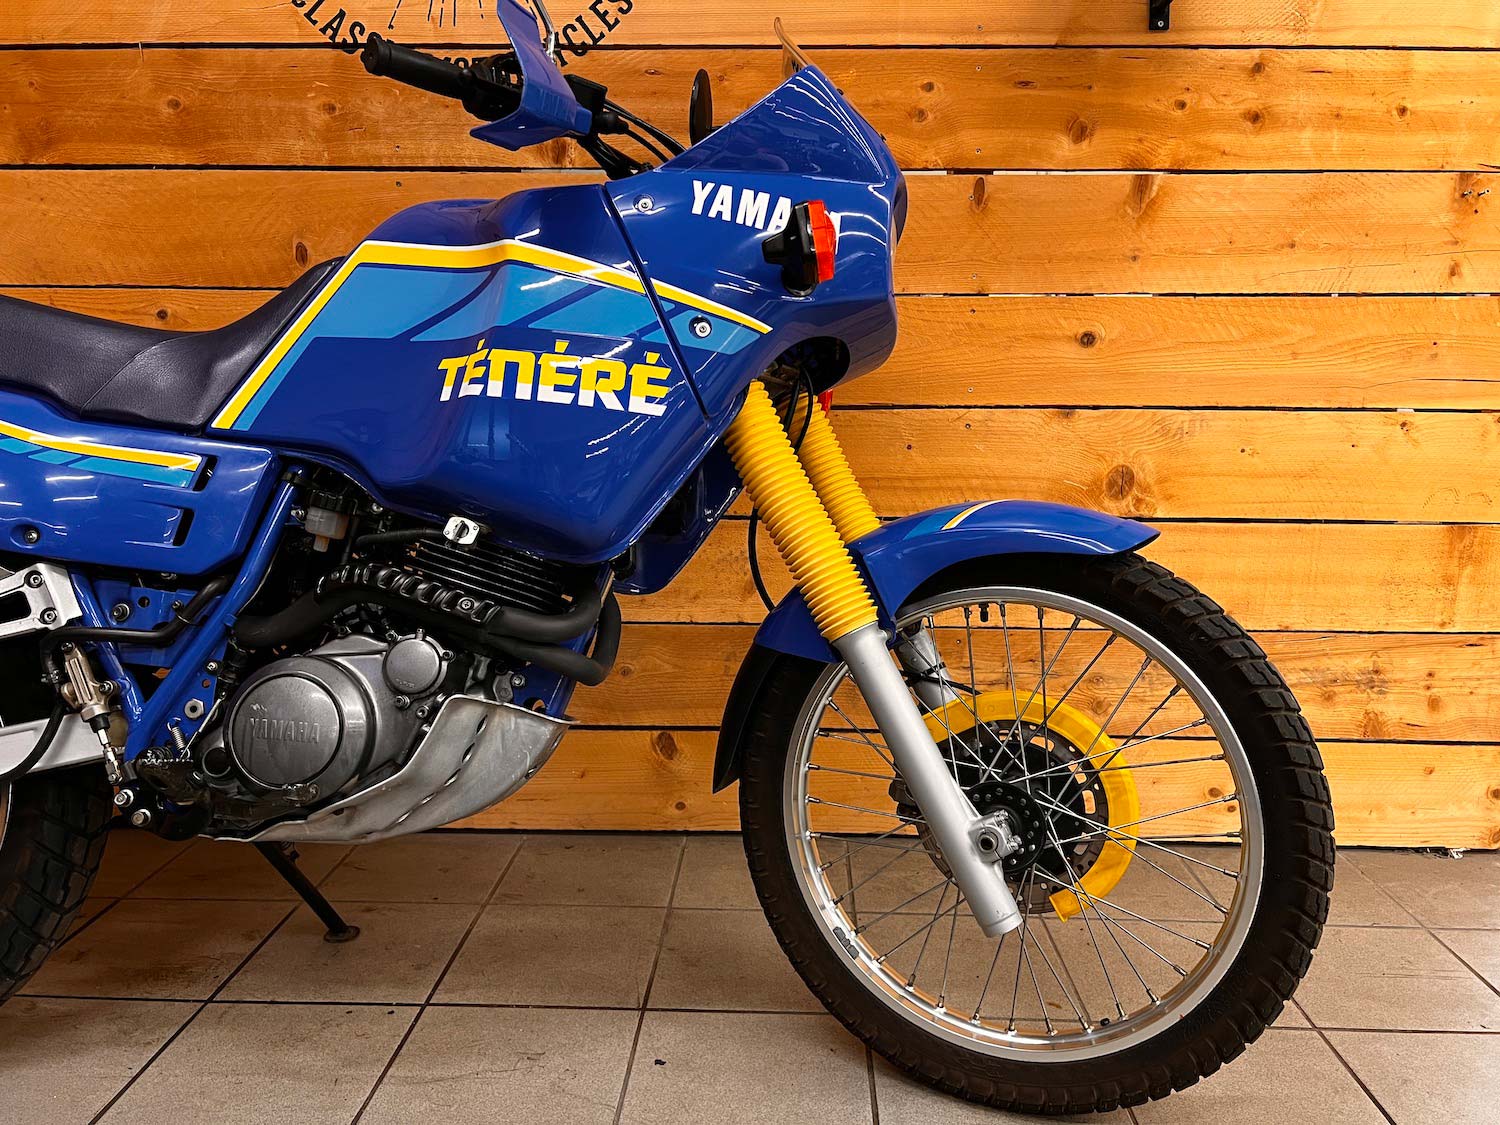 Yamaha_xt600z_Cezanne_classic_motorcycle_1-158.jpg